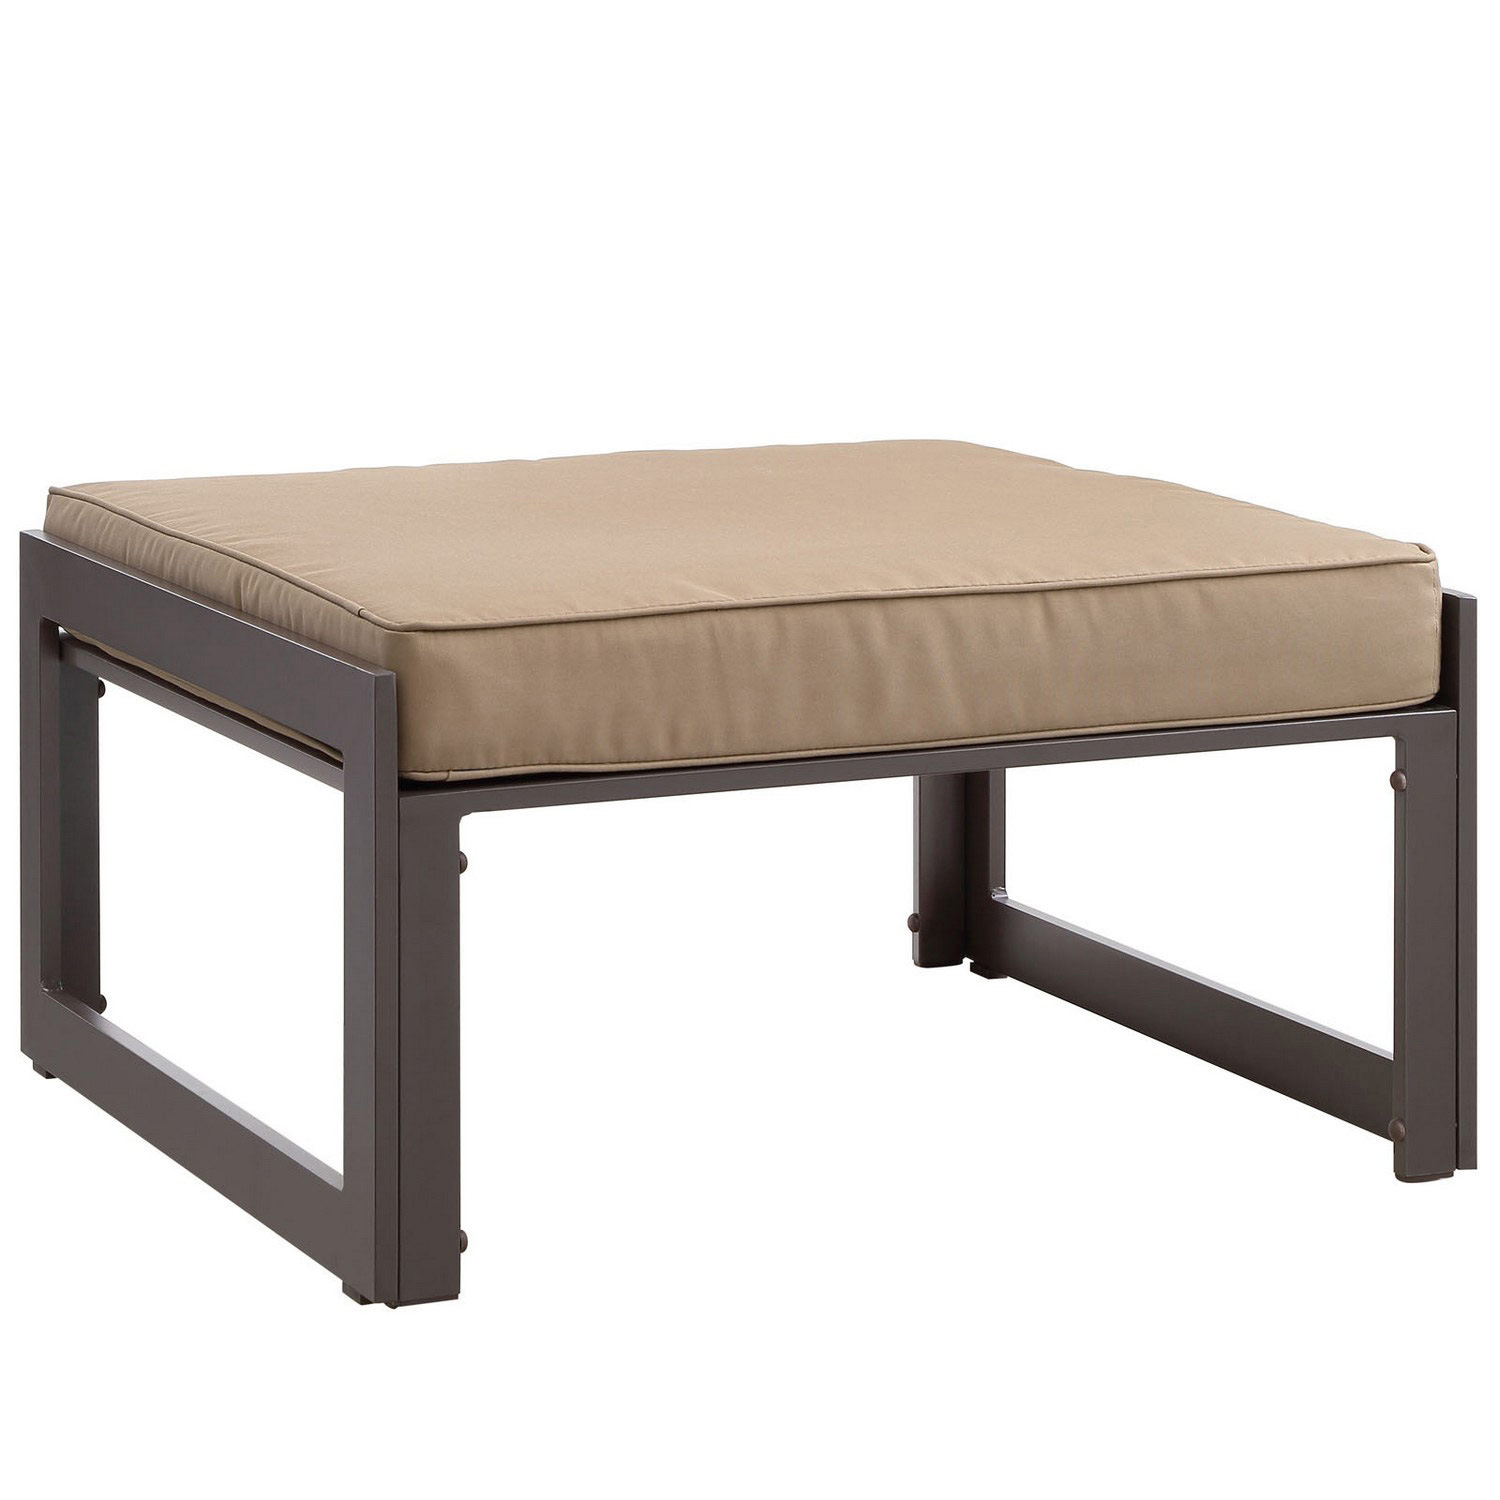 Modway Fortuna 5 Piece Outdoor Patio Sectional Sofa Set - Brown/Mocha